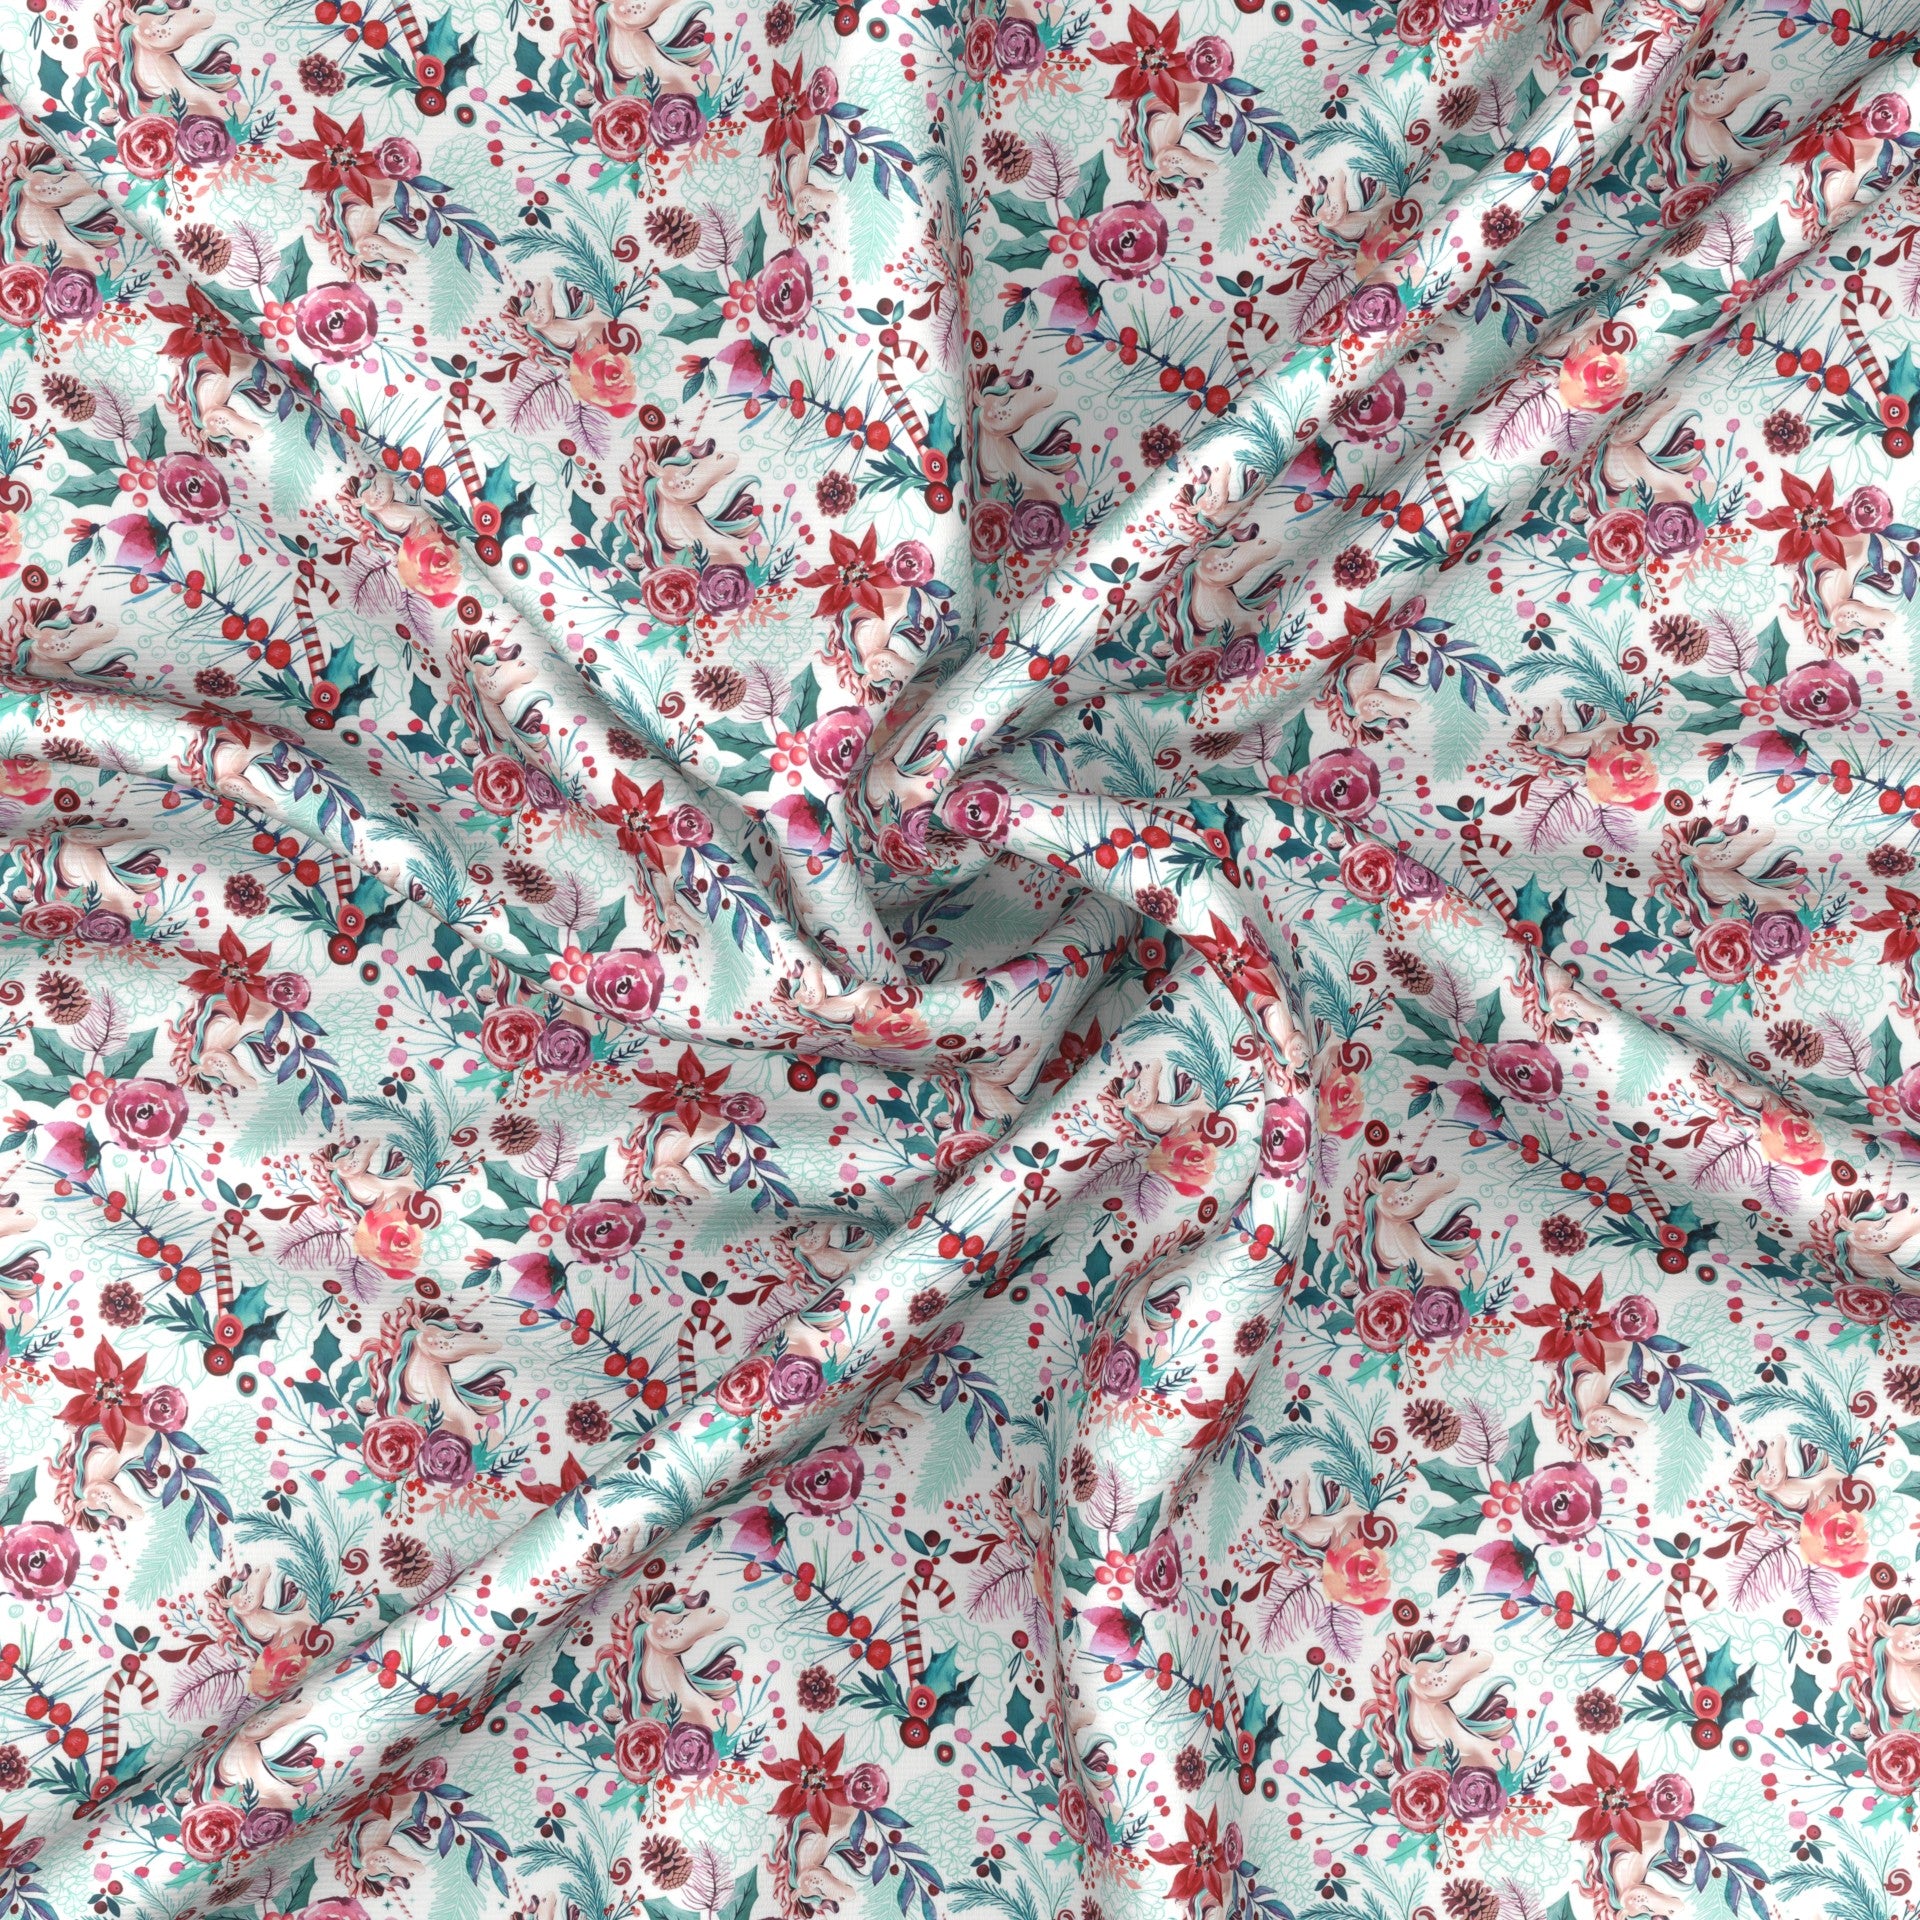 Unicorn Floral - Whimsical Christmas Watercolor Print - Poinsettia Flowers Fabric, Raspberry Creek Fabrics